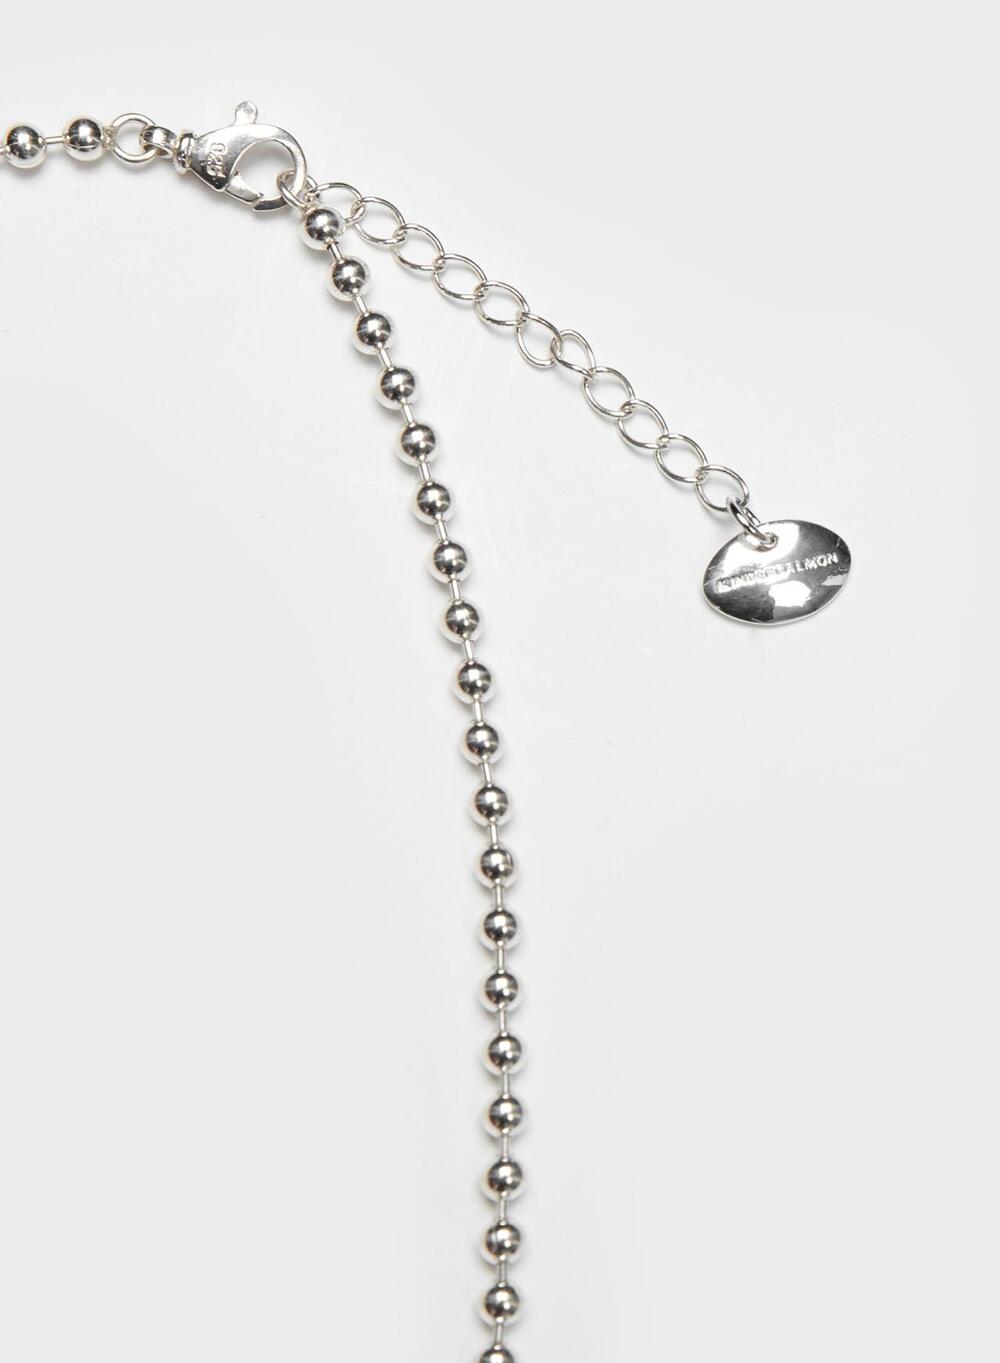 SS23 Adèle Black Onyx Ball Chain Necklace